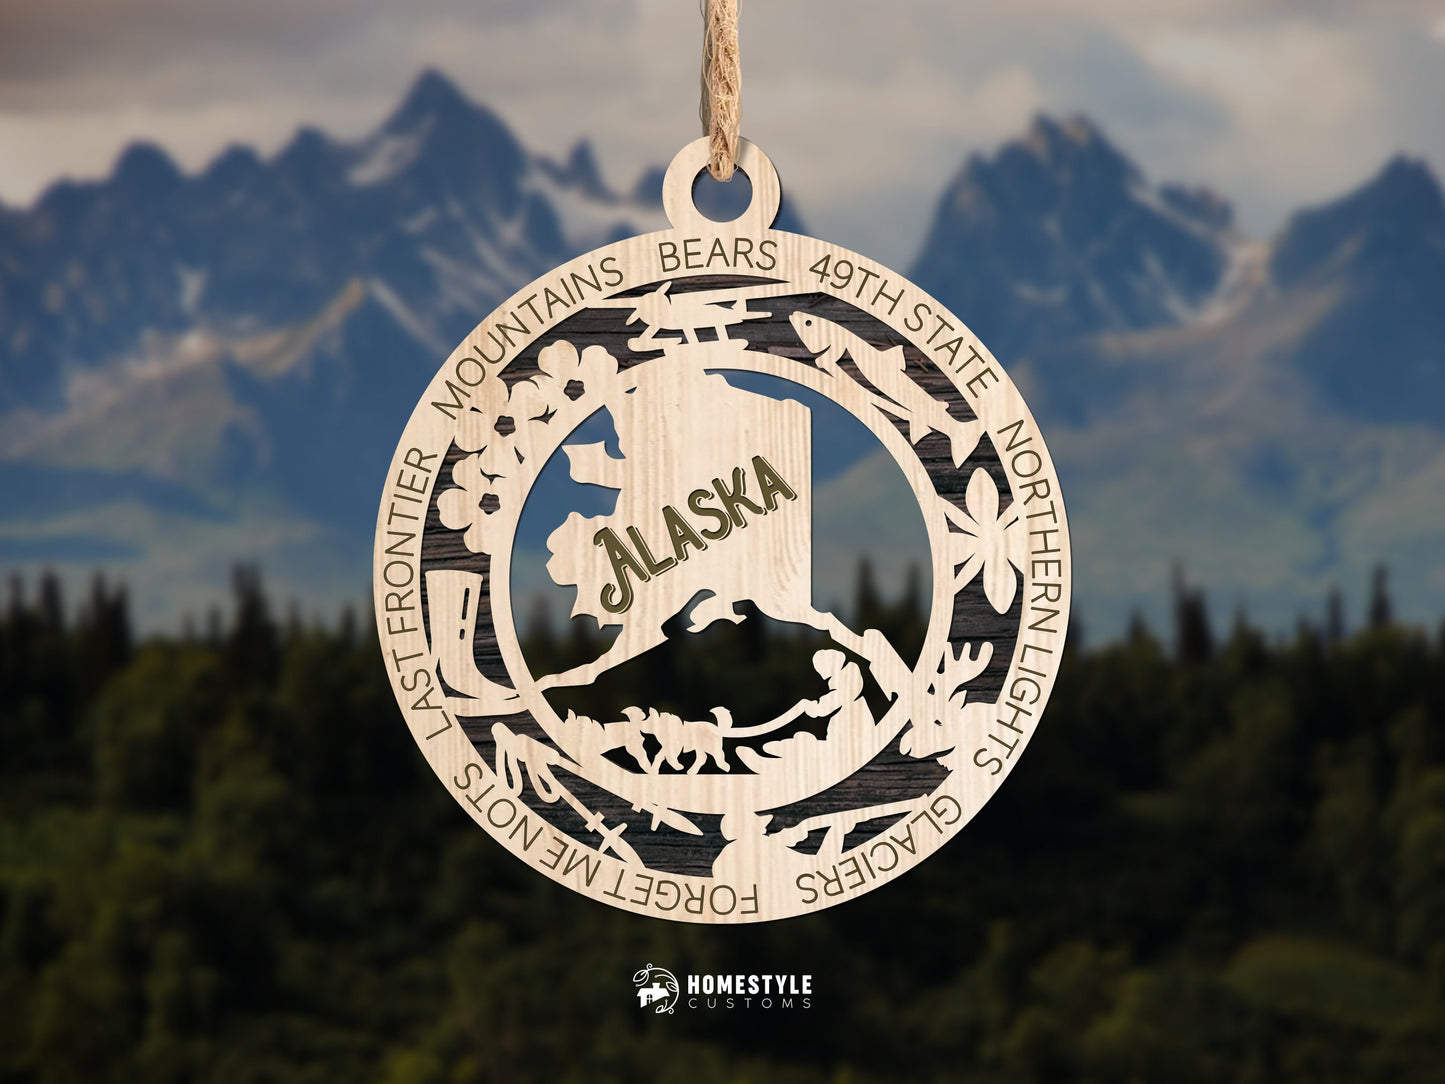 Alaska State Ornament - SVG File Download - Sized for Glowforge - Laser Ready Digital Files